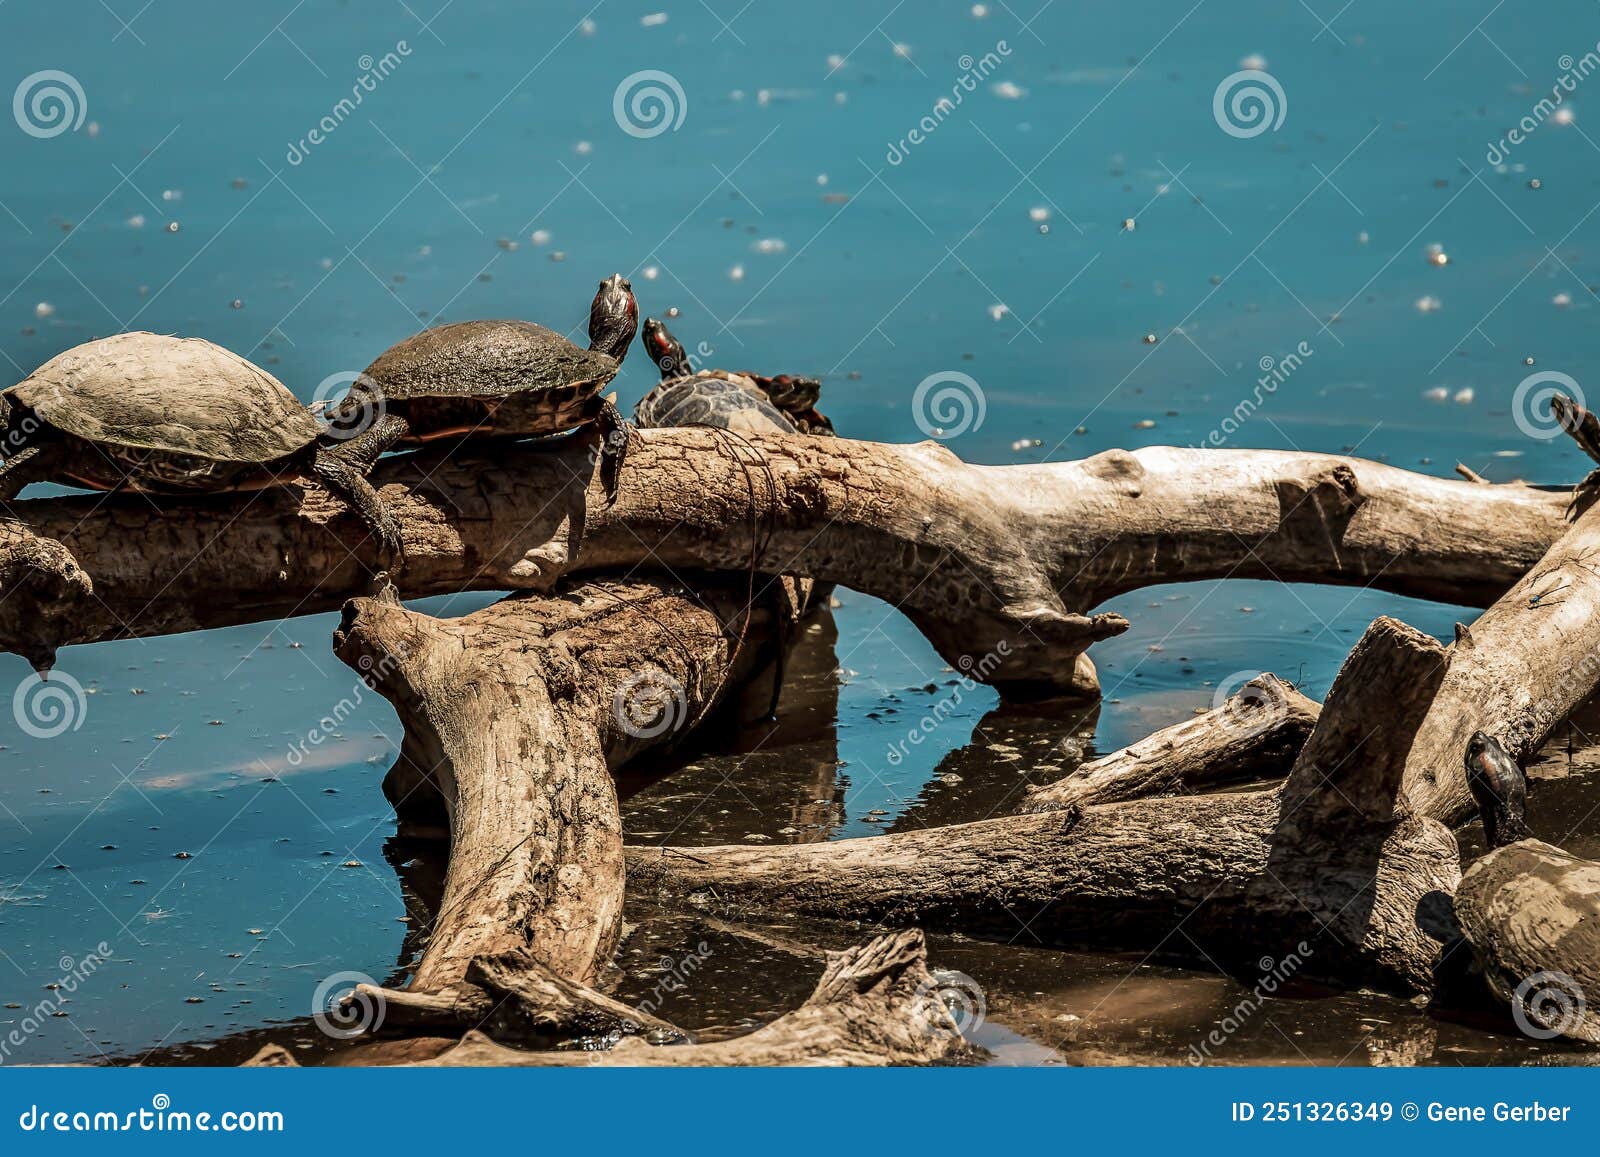 turtles enjoying the sun and water